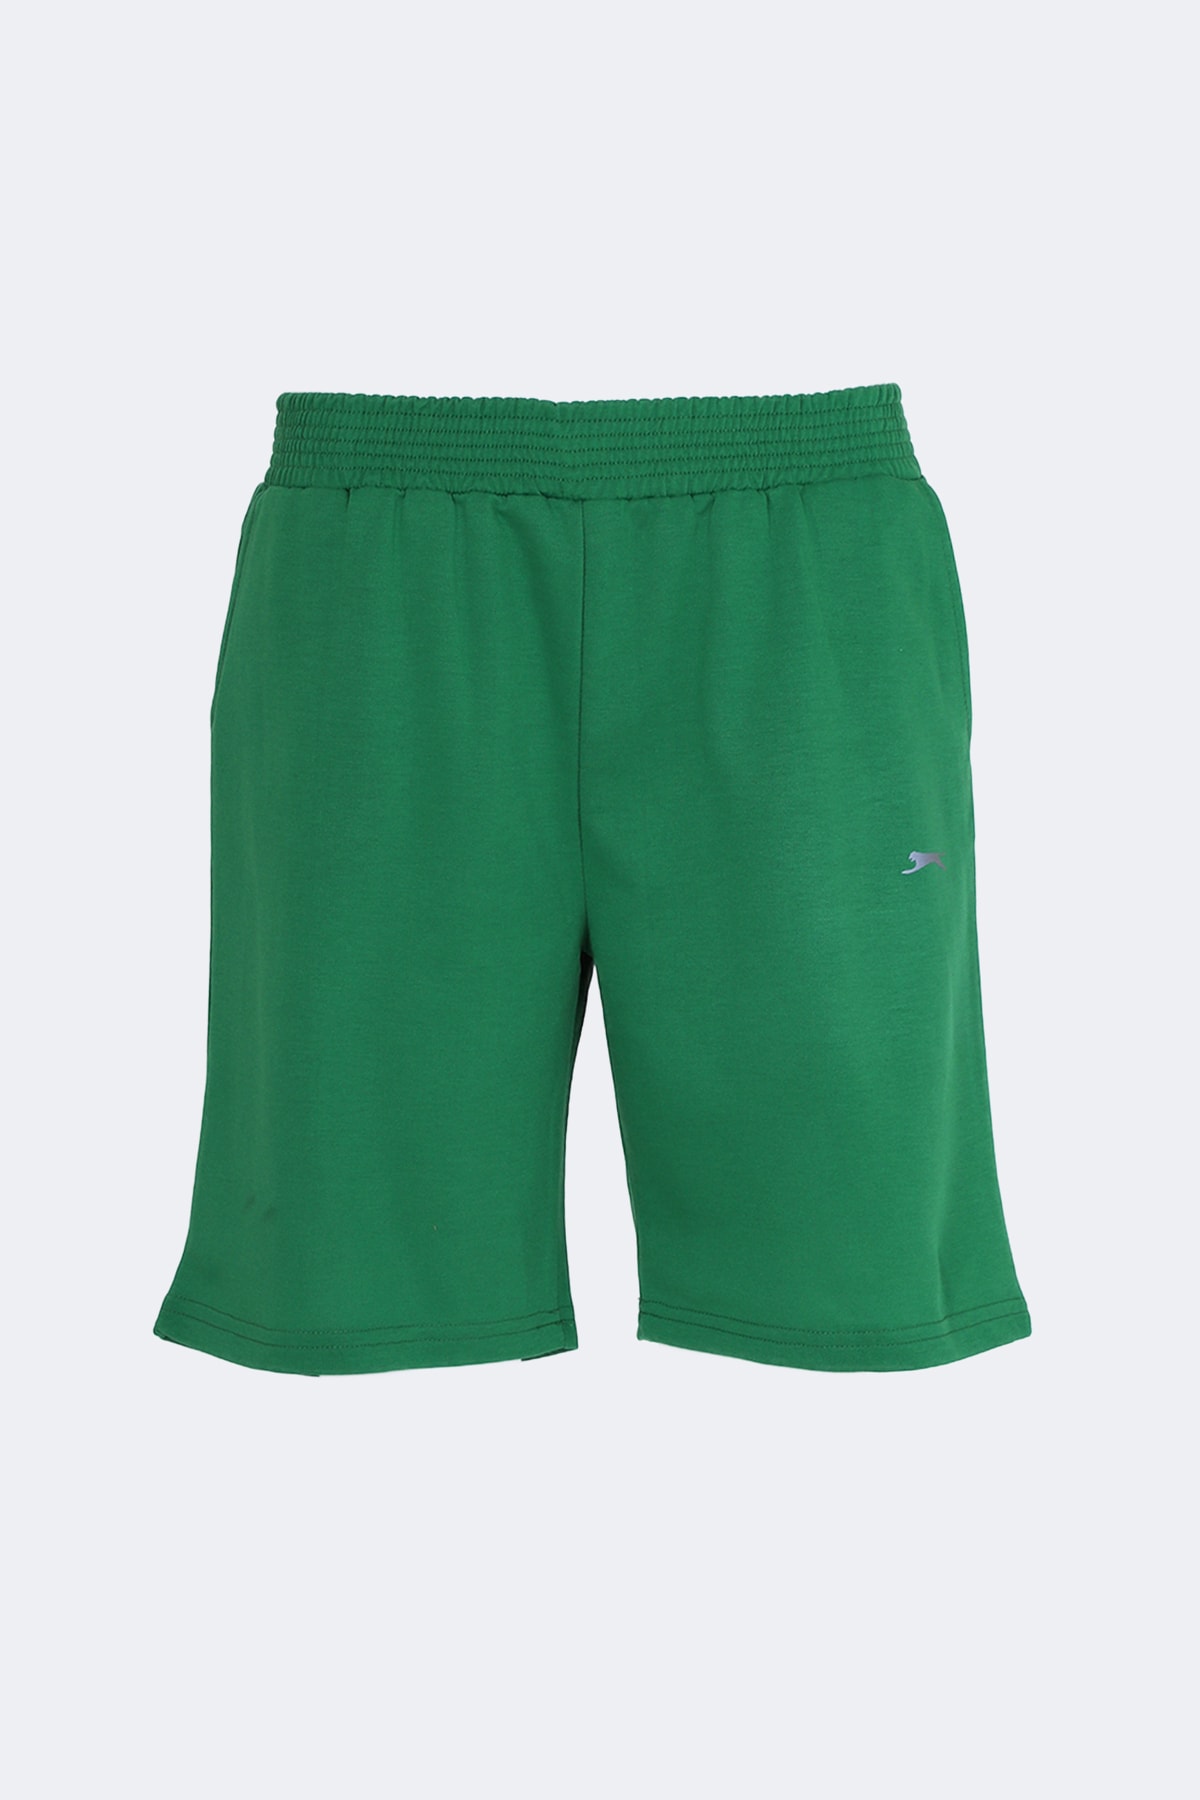 Slazenger Isadore Women's Shorts Green